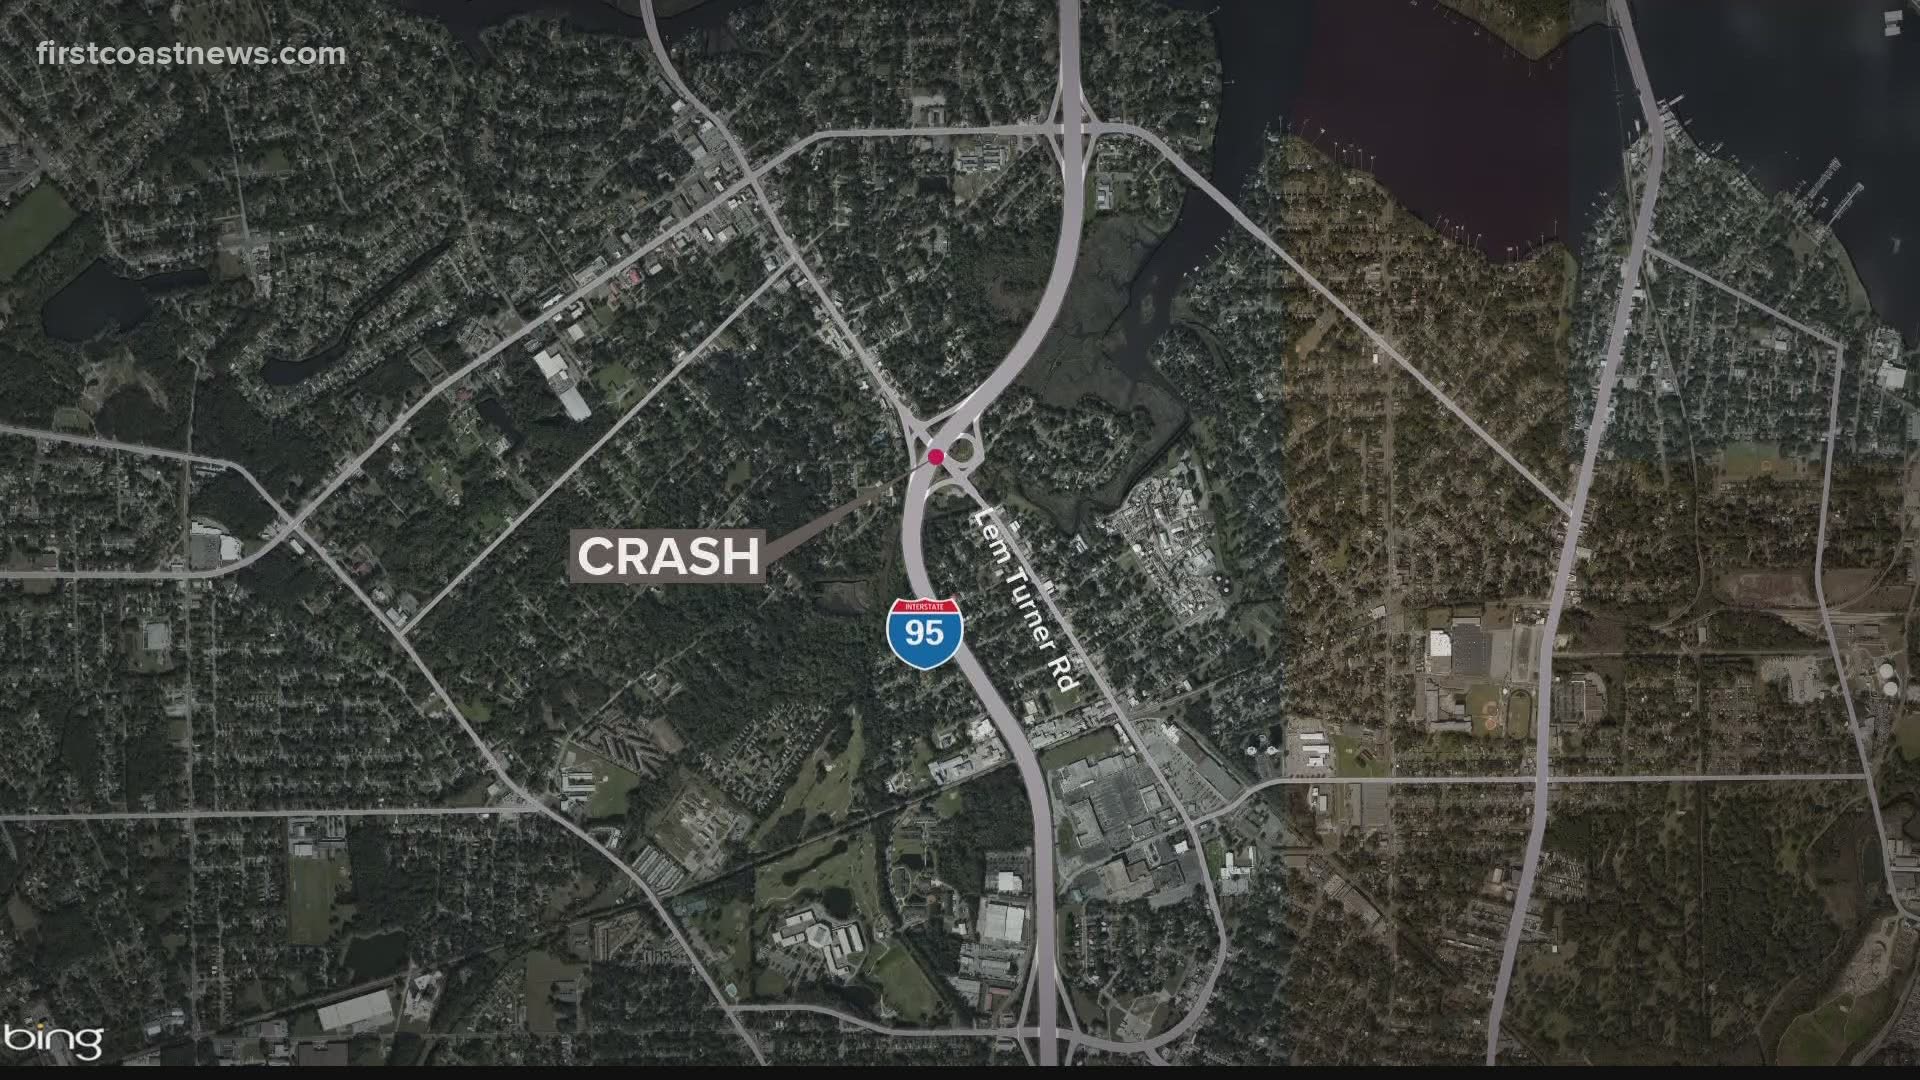 1 dead, 4 injured in crash on I-295 Sunday morning